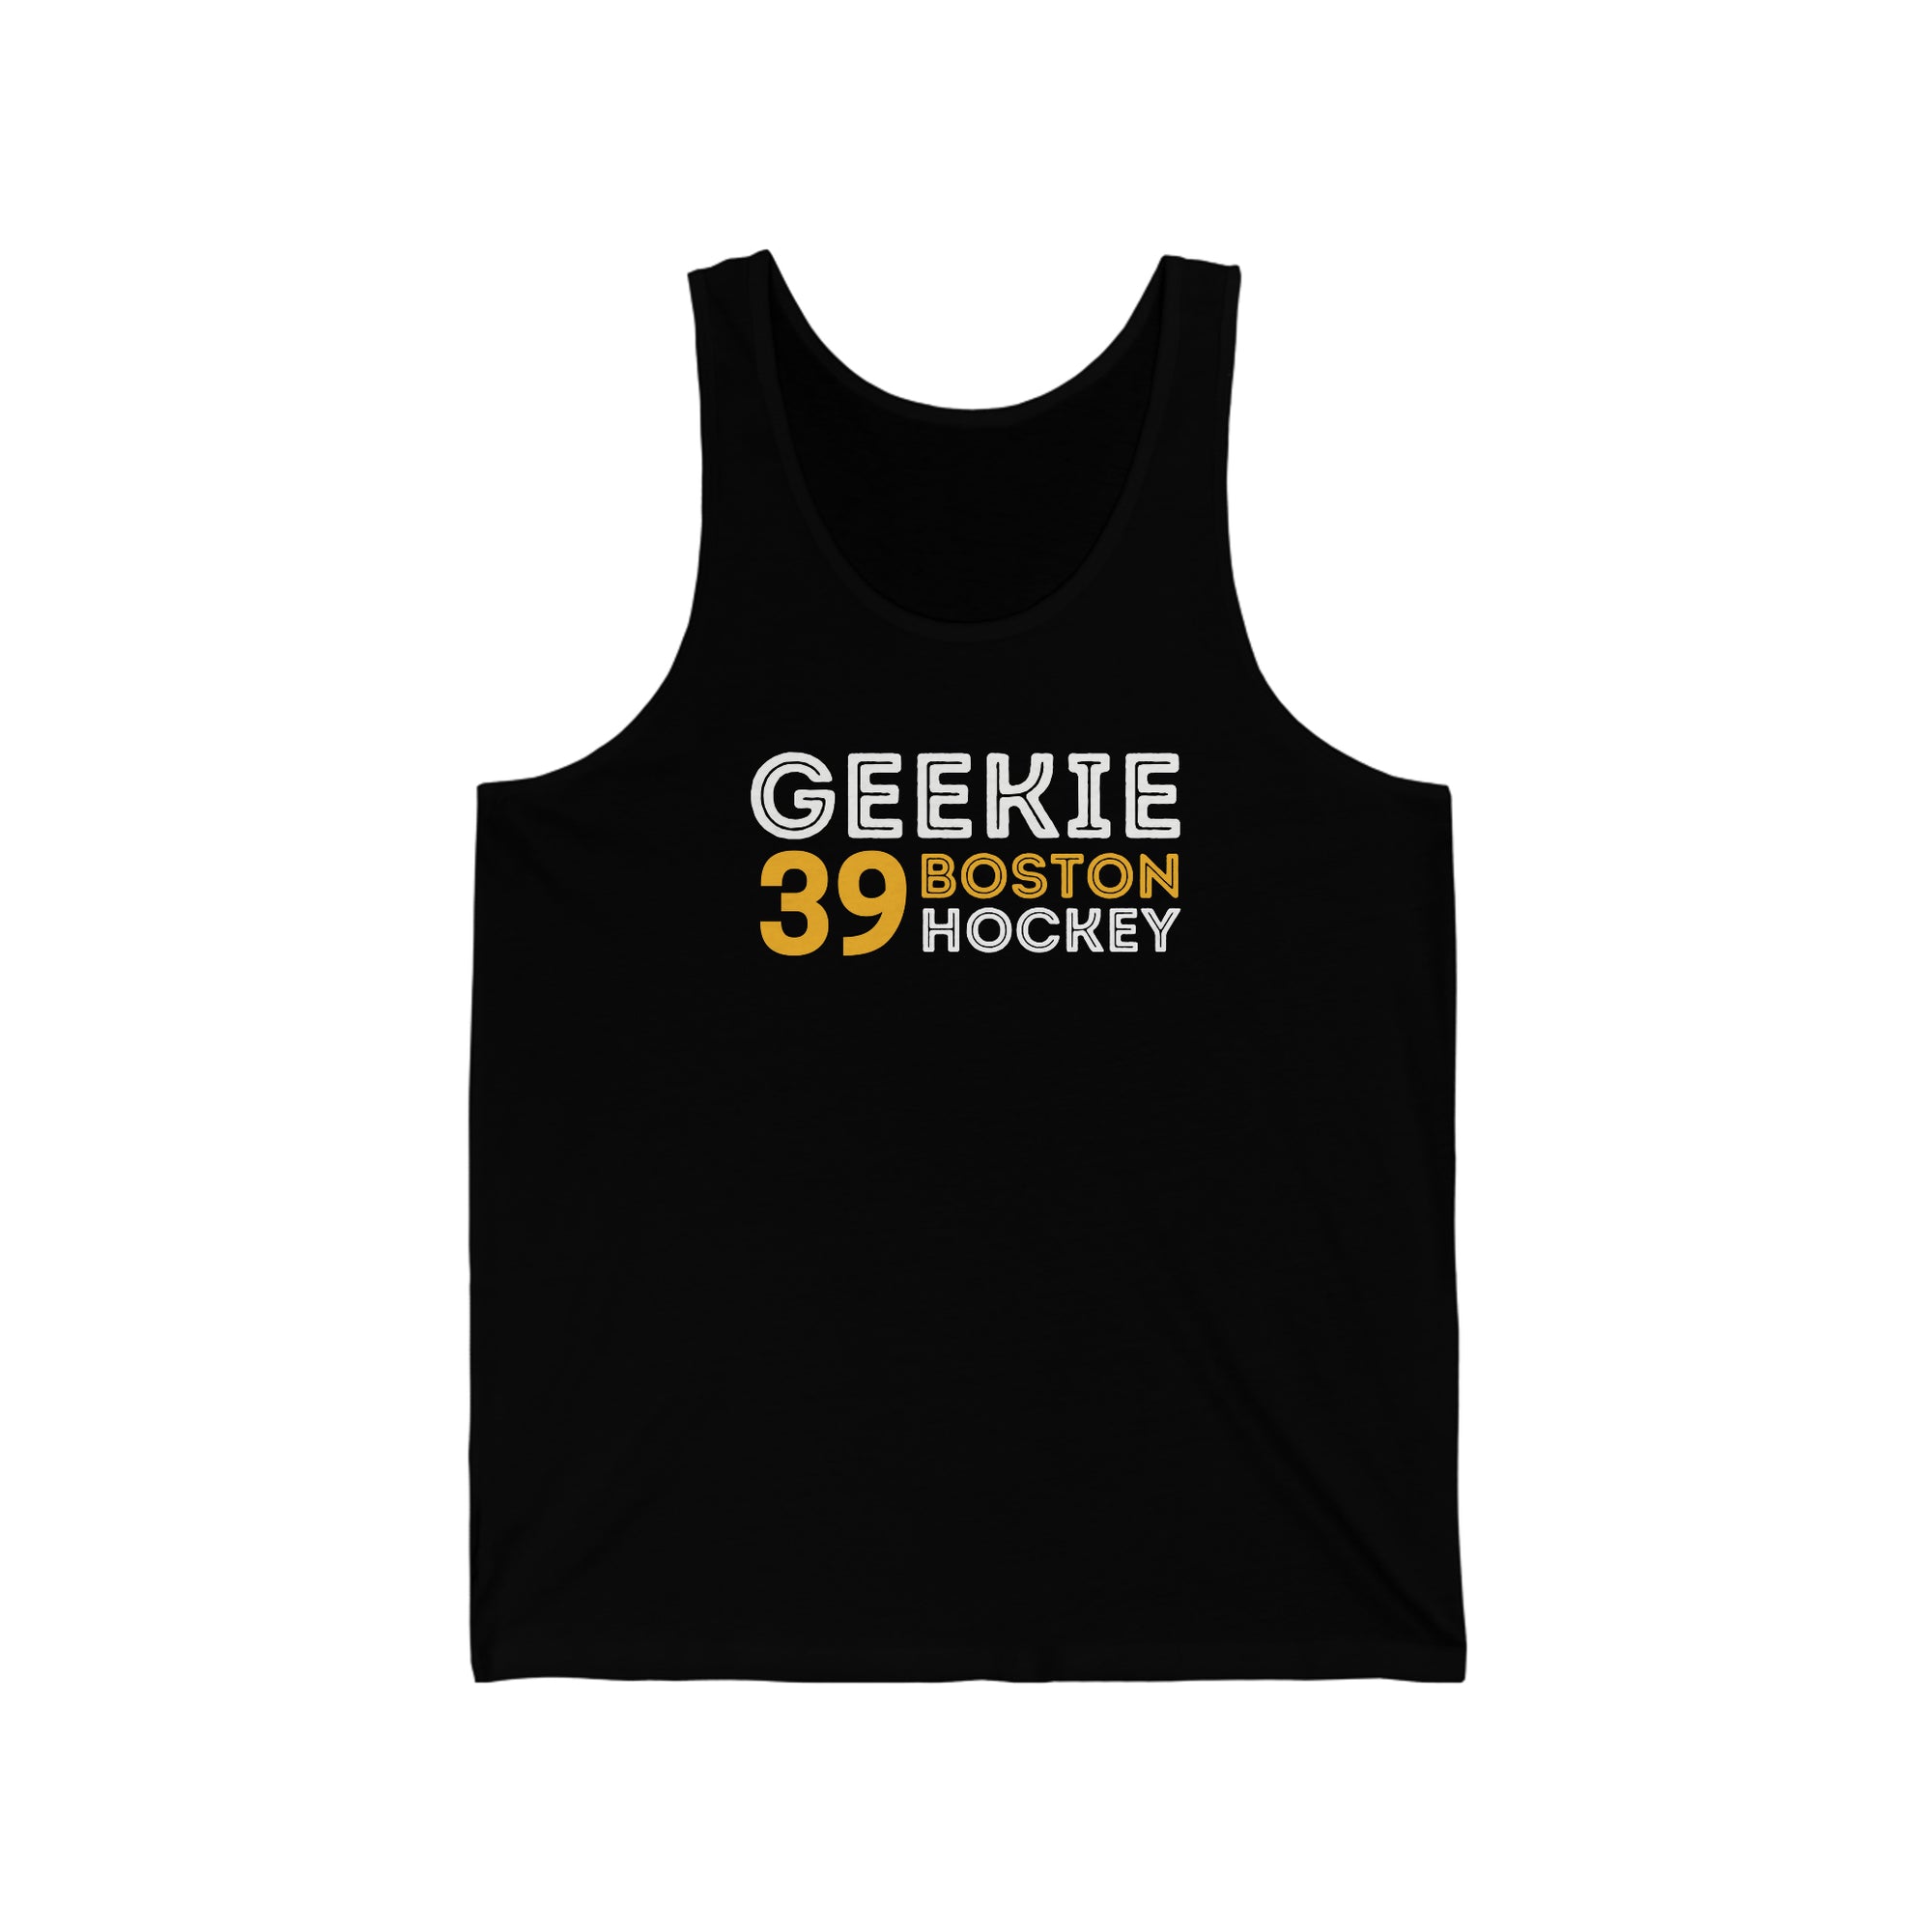 Geekie 39 Boston Hockey Grafitti Wall Design Unisex Jersey Tank Top